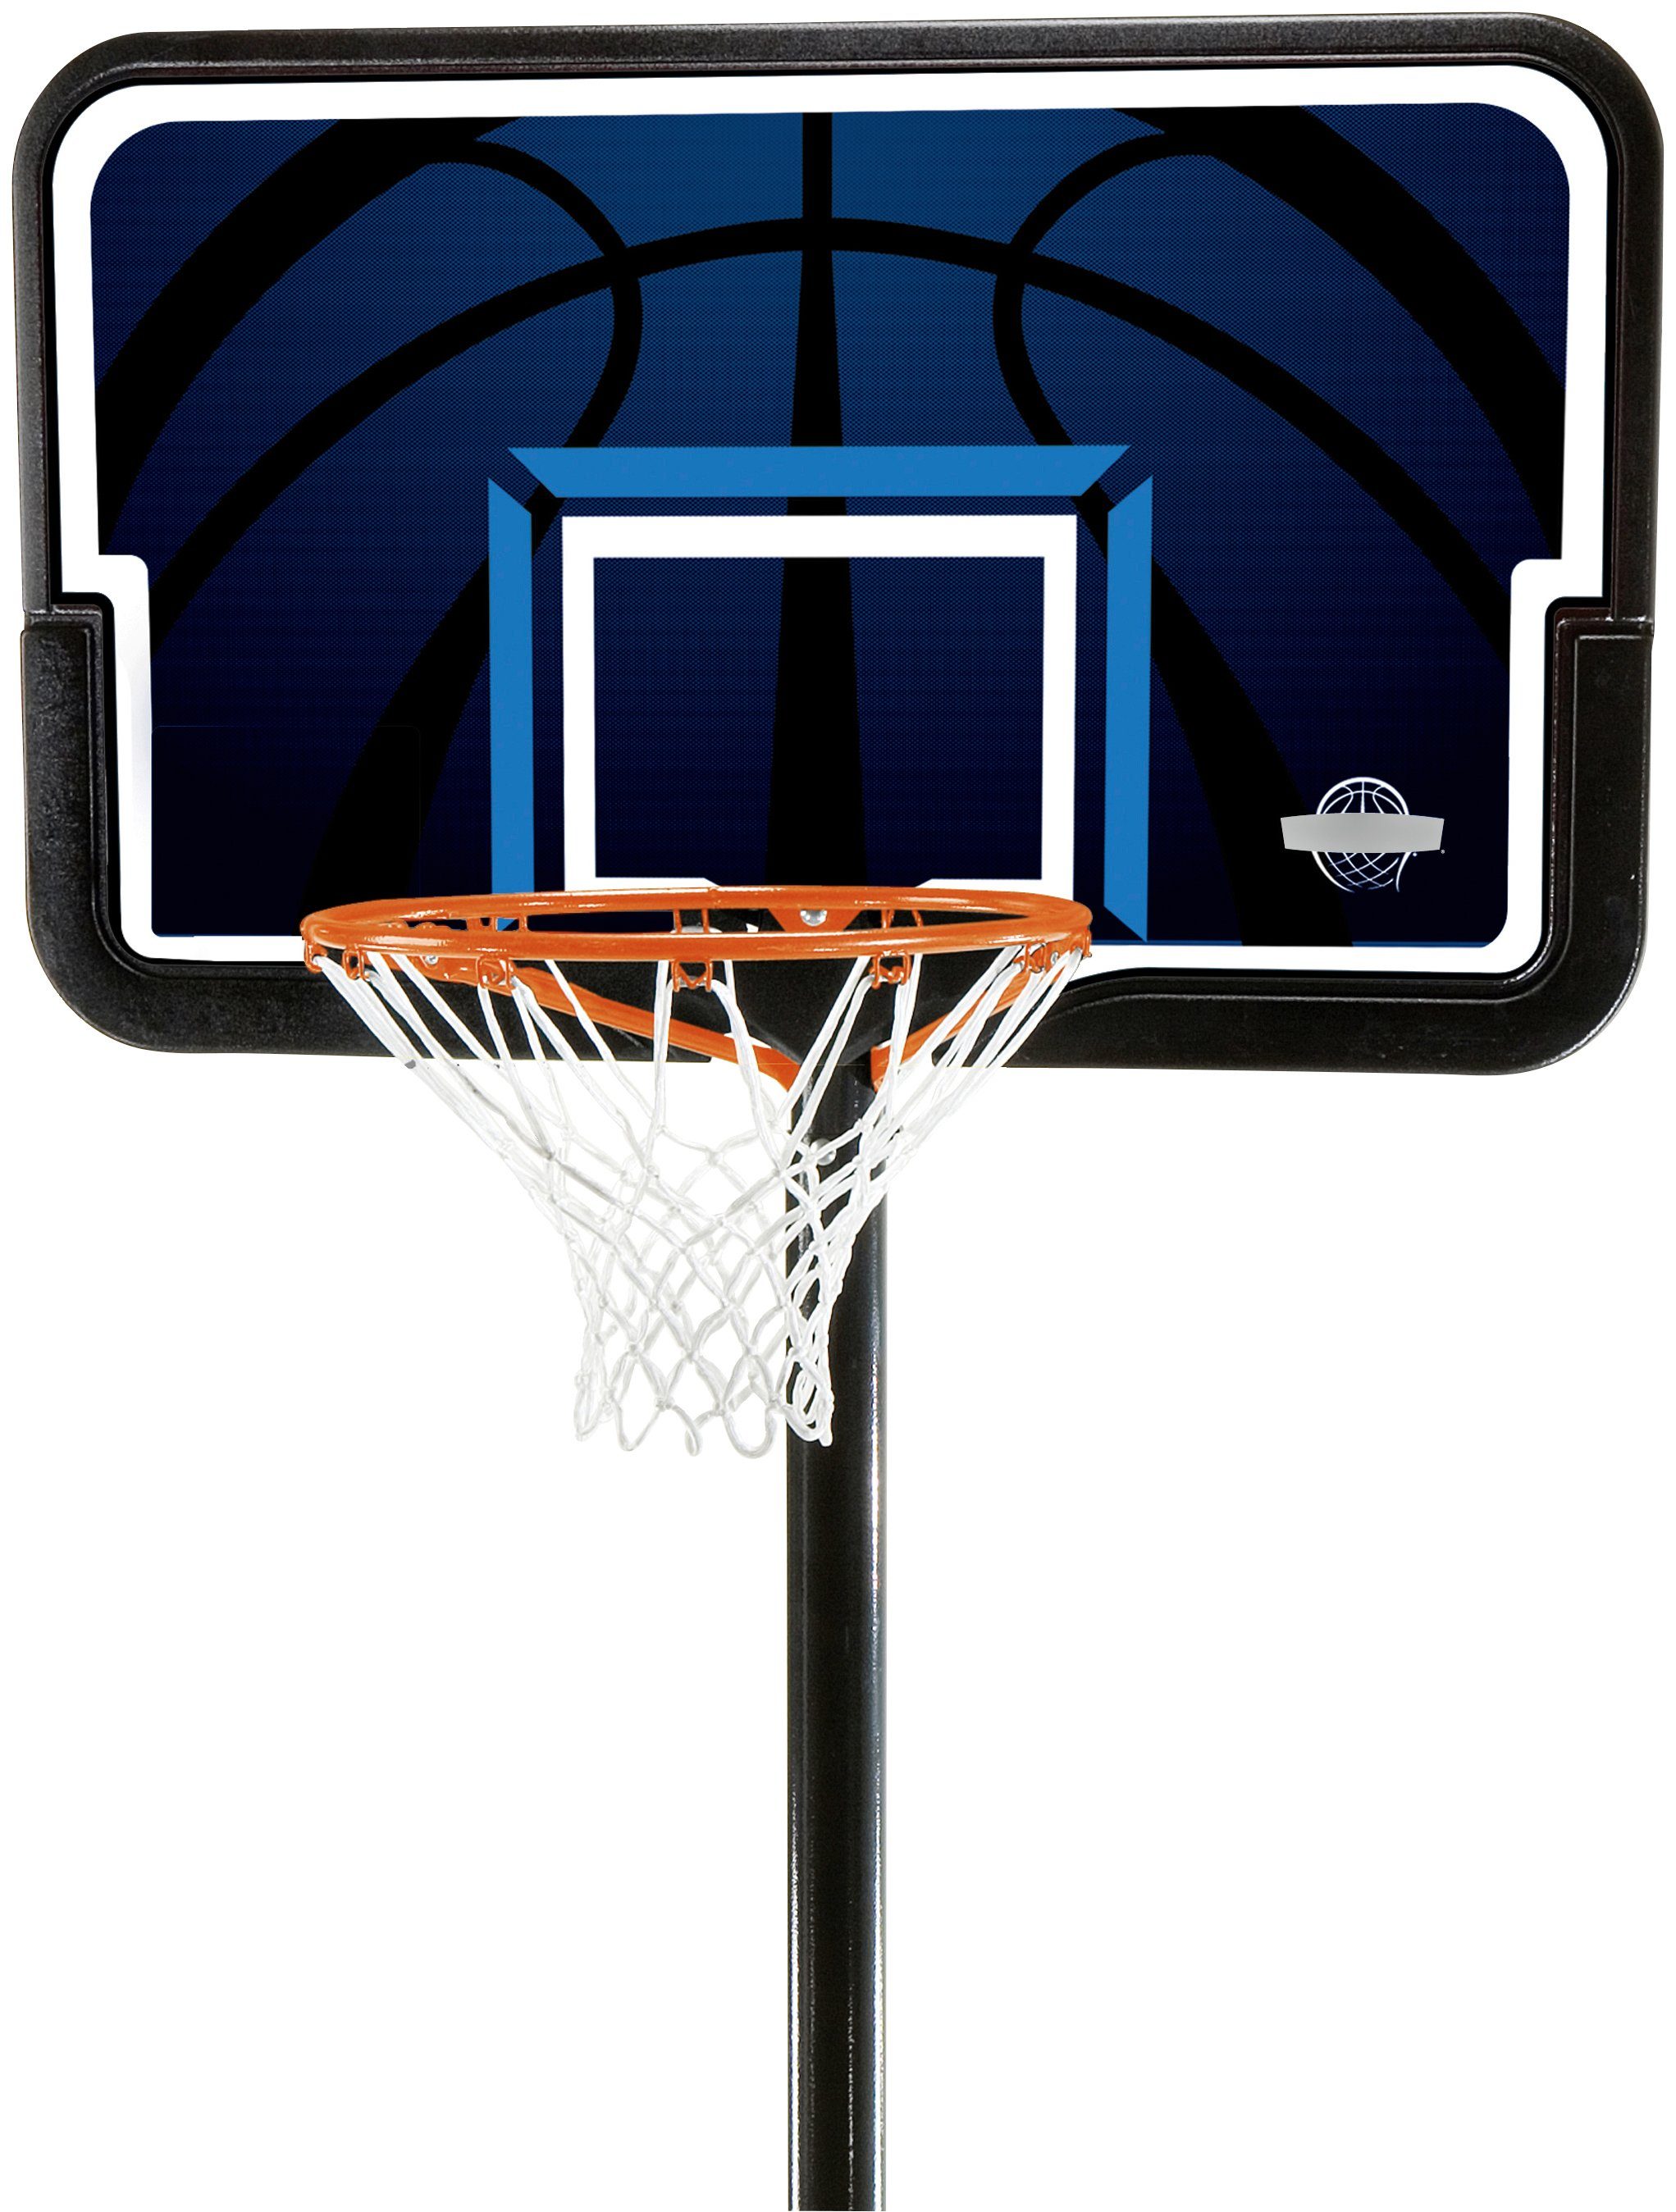 Spielzeug Basketballkörbe 50NRTH Basketballkorb Nevada, höhenverstellbar schwarz/blau